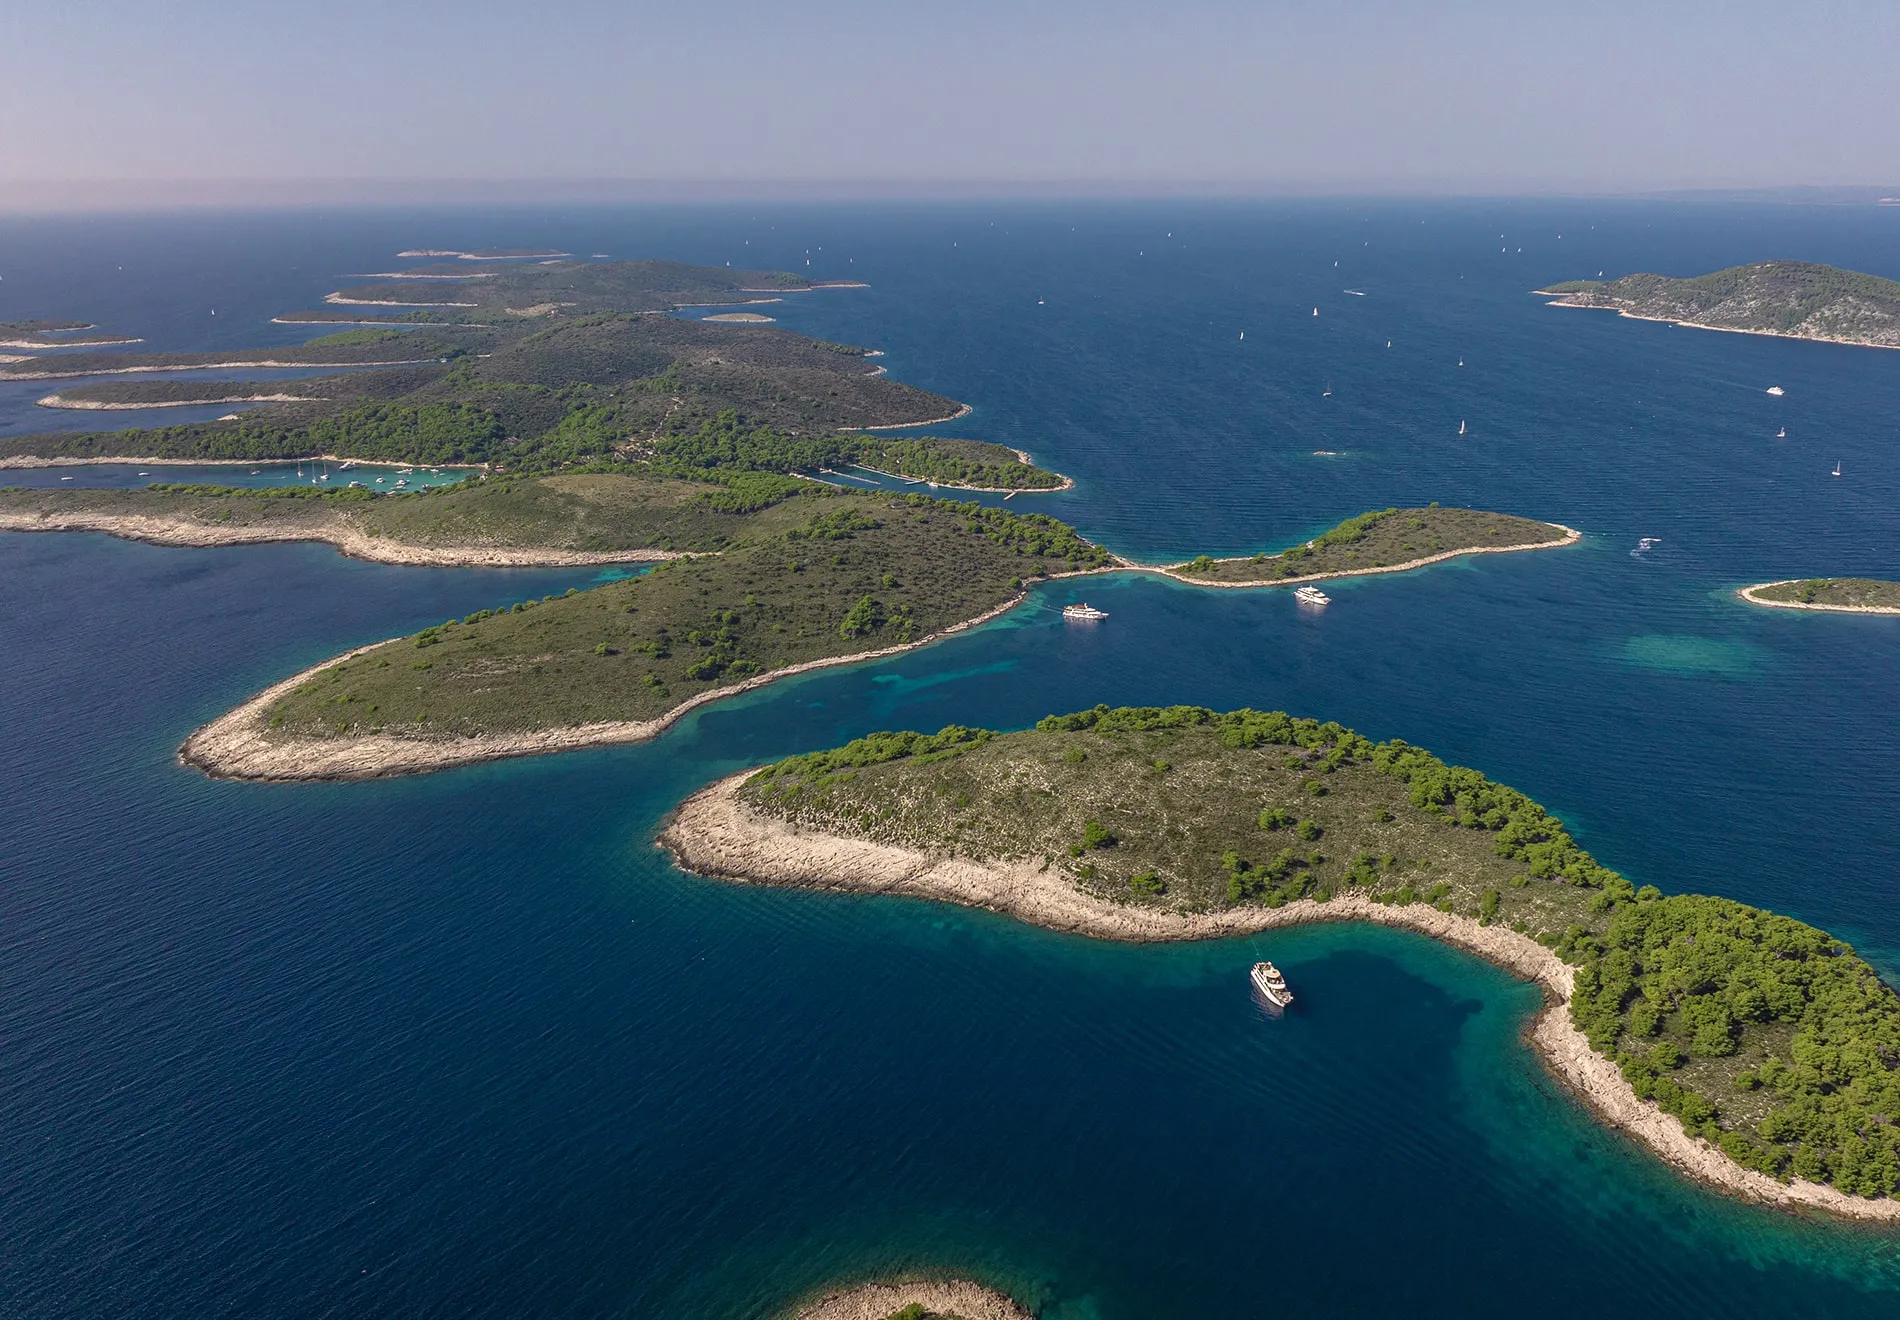 Croatia The Jewel of the Adriatic